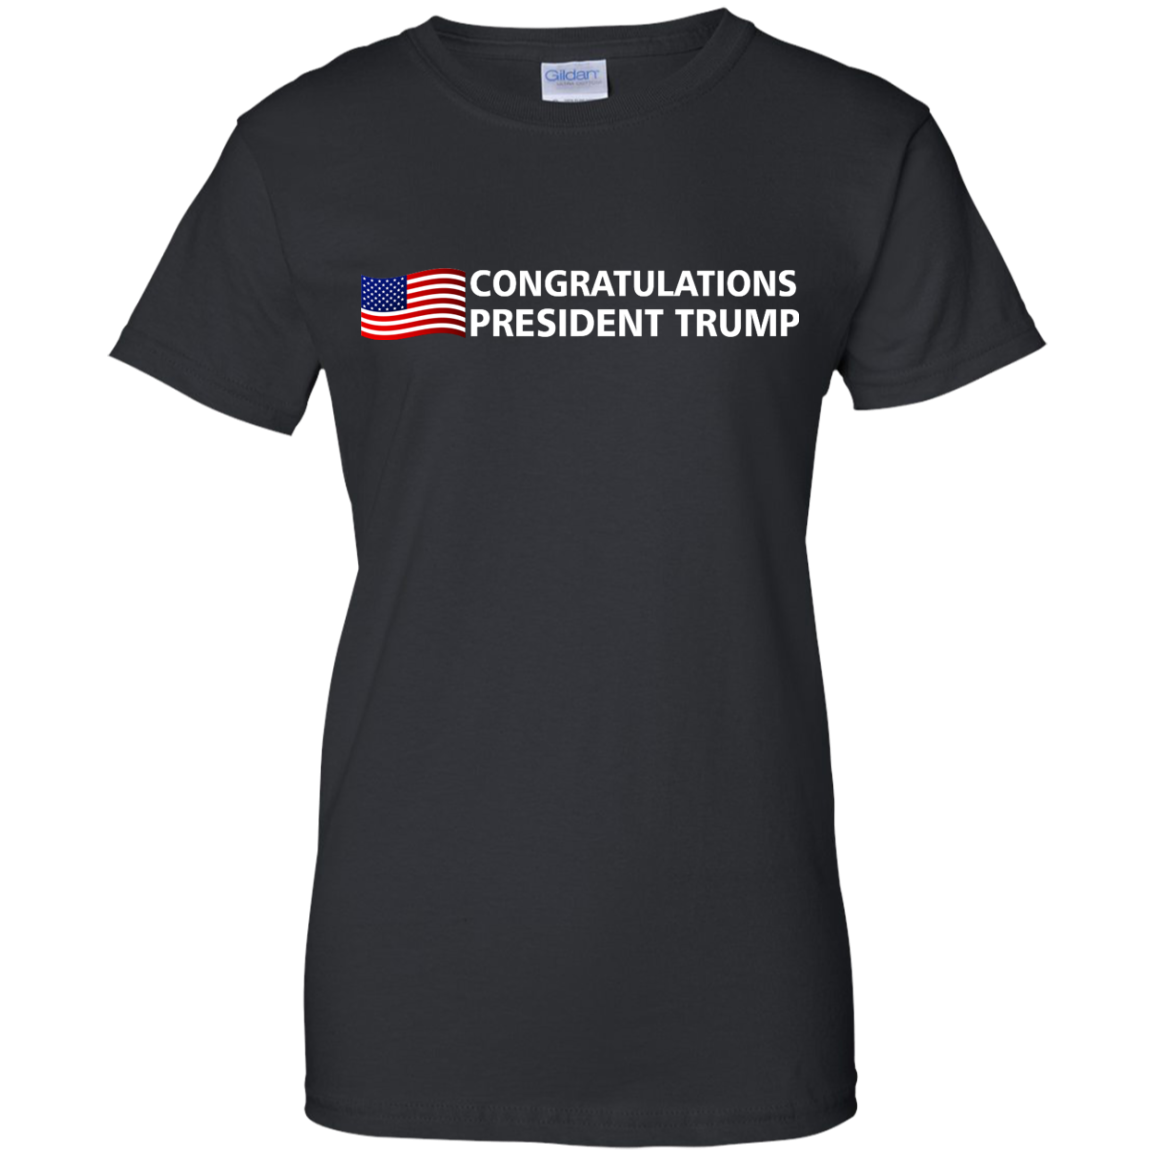 Congratulations president Trump shirt, hoodie, tank - ifrogtees